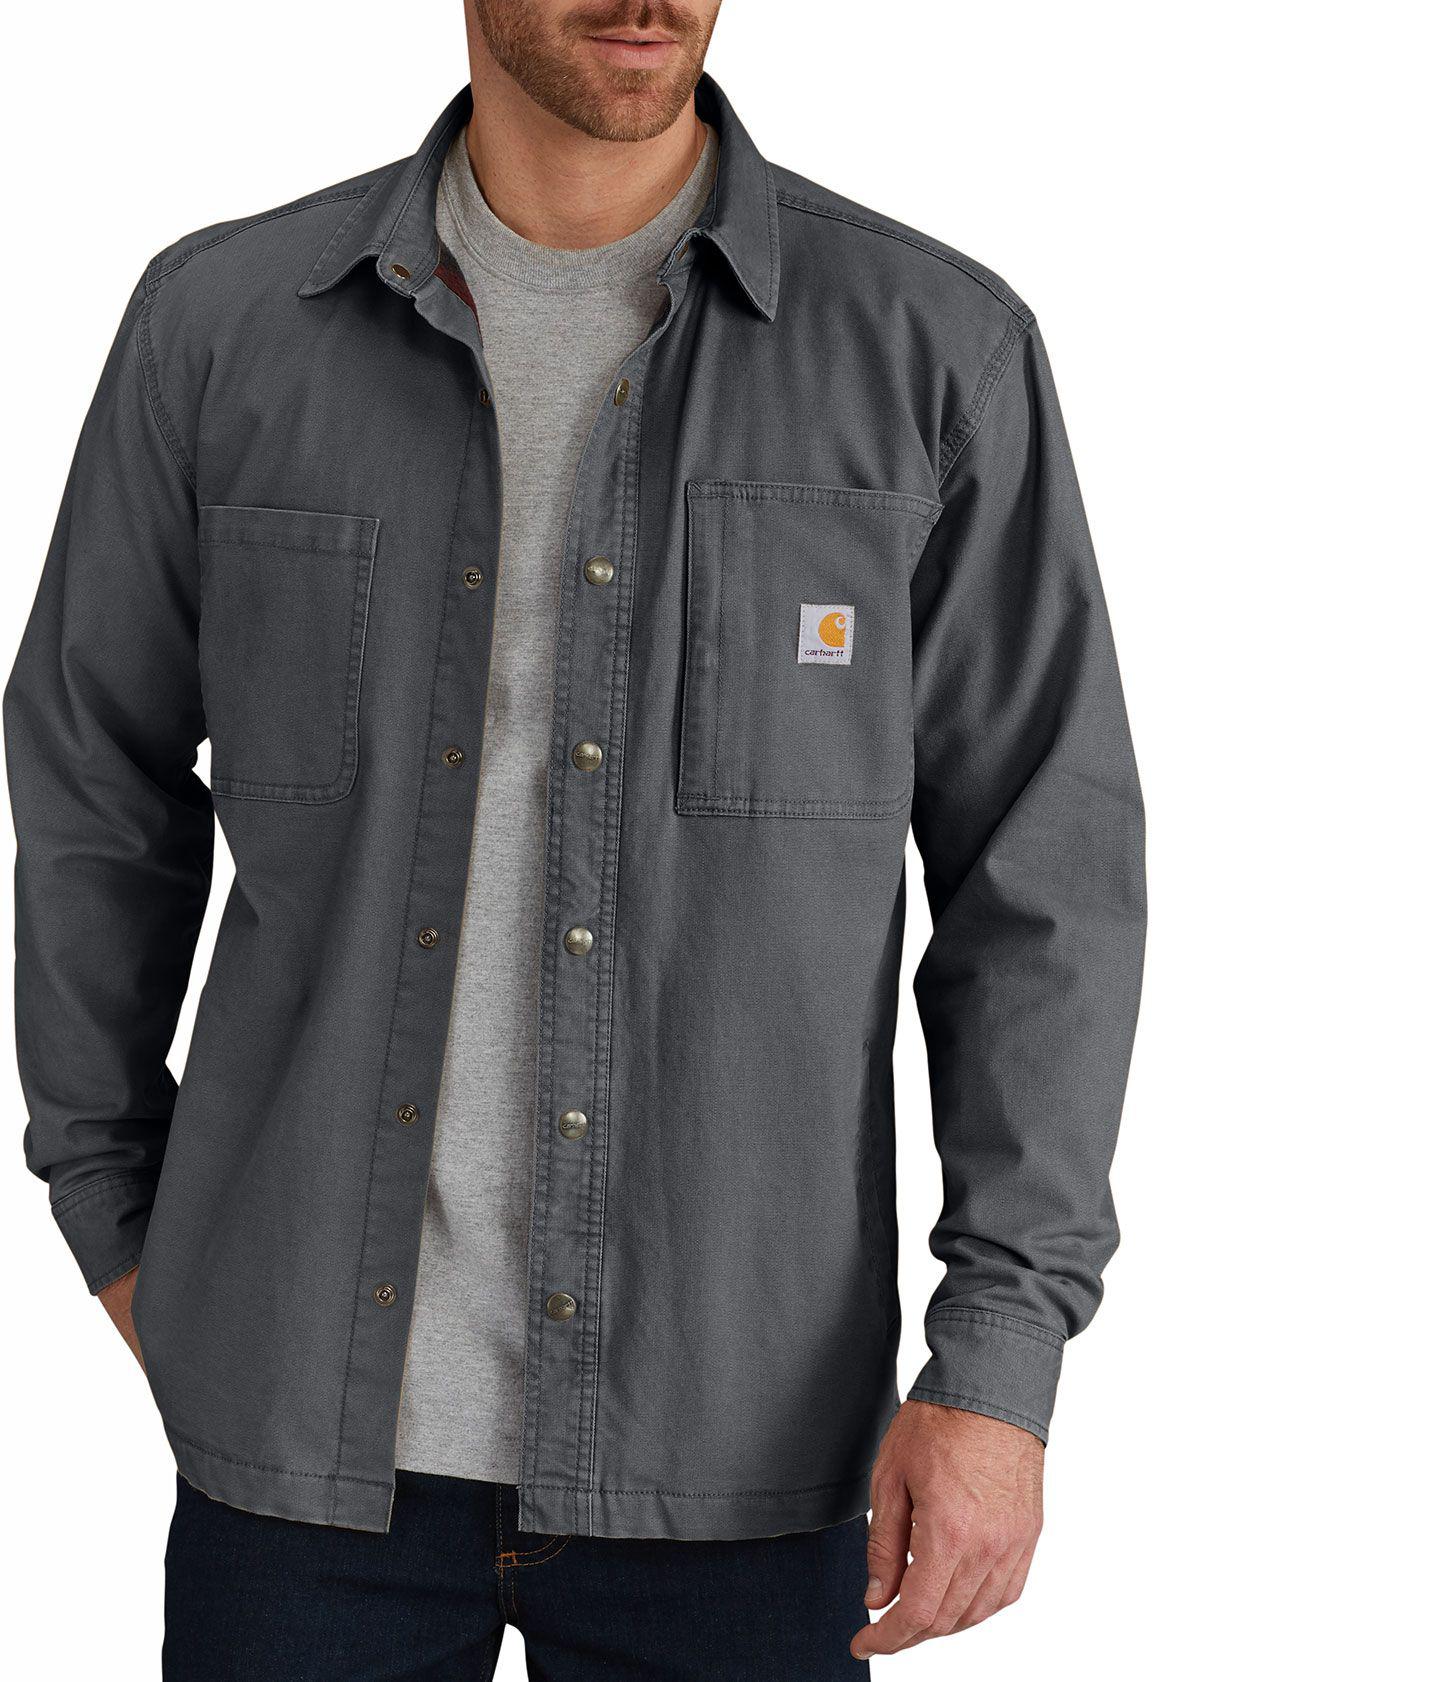 Carhartt Rugged Flex Rigby Fleece-lined Shirt Jacket in Gray for Men - Lyst